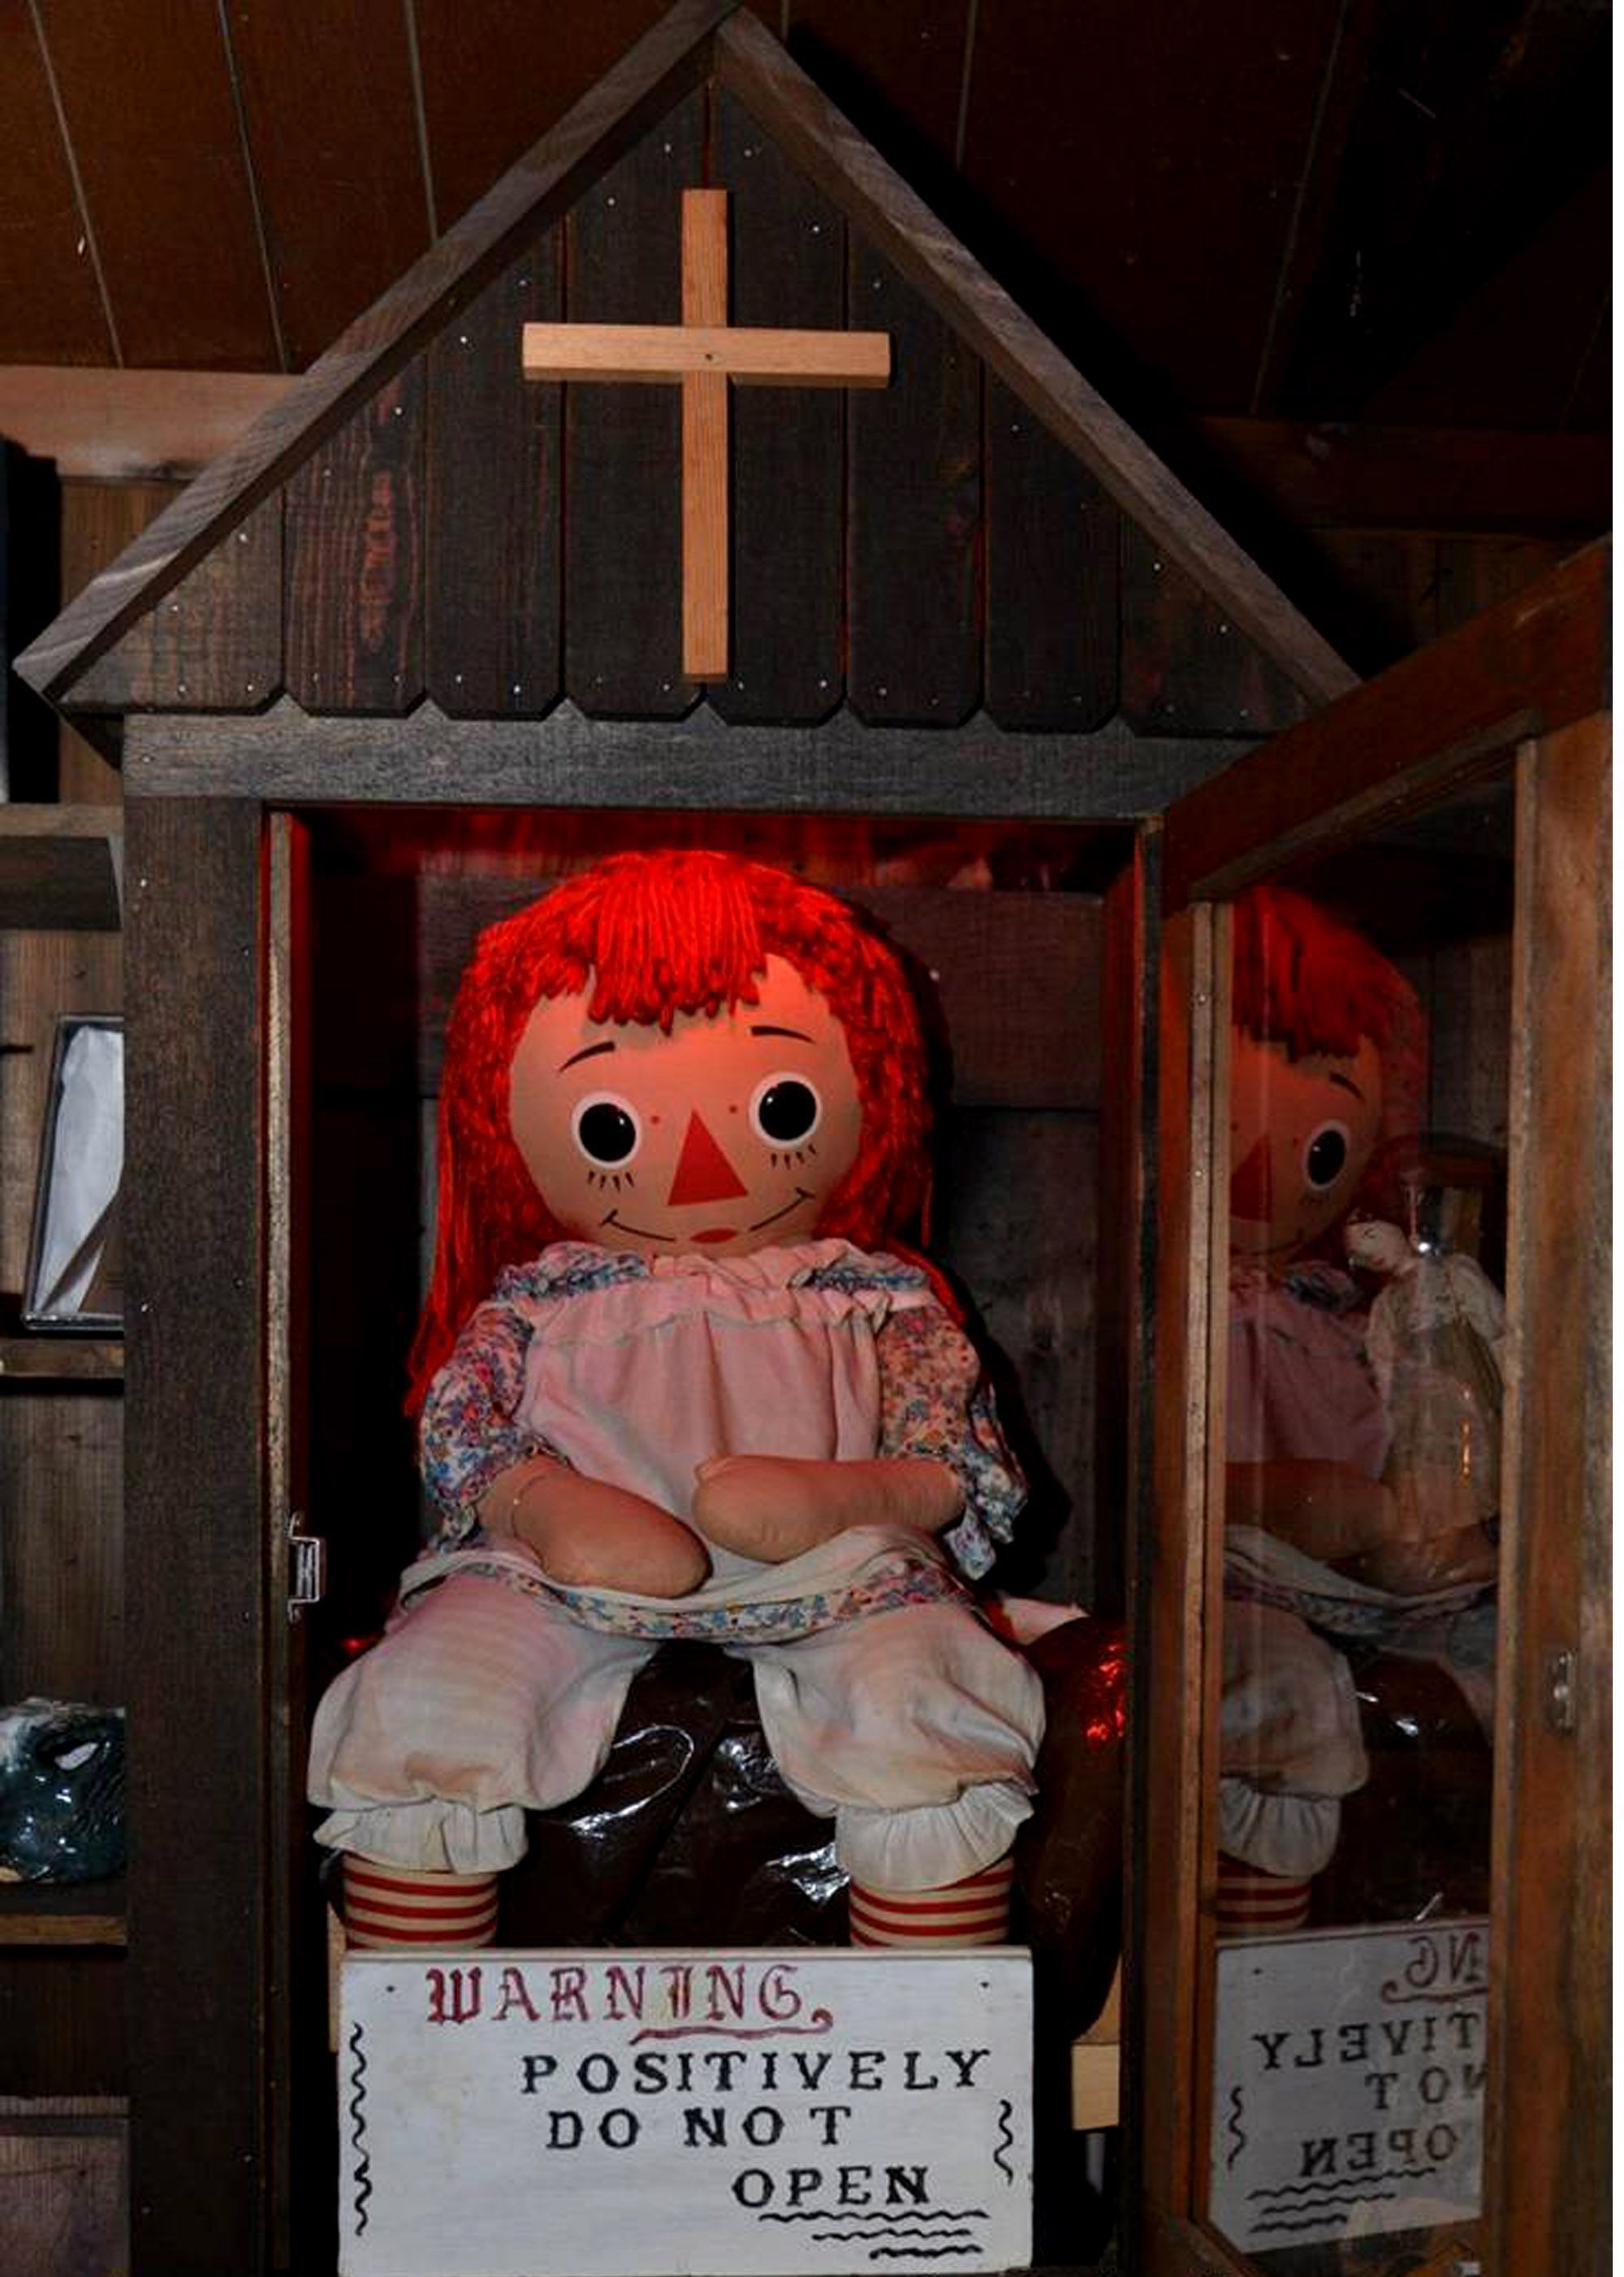 Raggedy Ann Doll boneka asli Annabelle di museum The Warrens Occult